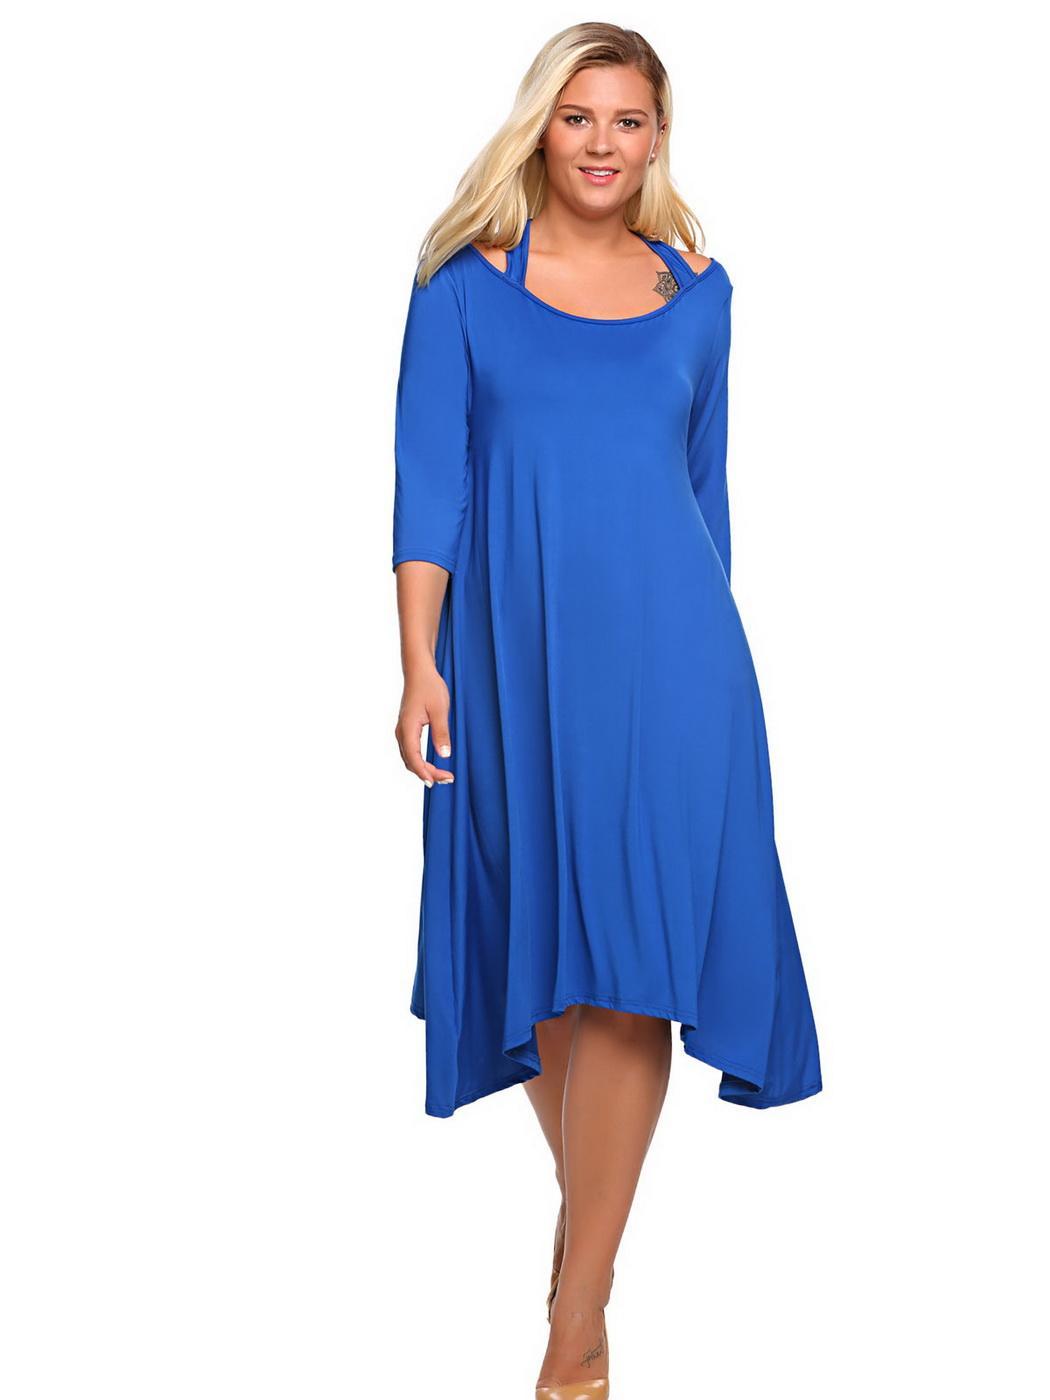 Women Plus Sizes 3/4 Sleeve Cutout A-Line Short Casual Dress EHE8 03 | eBay